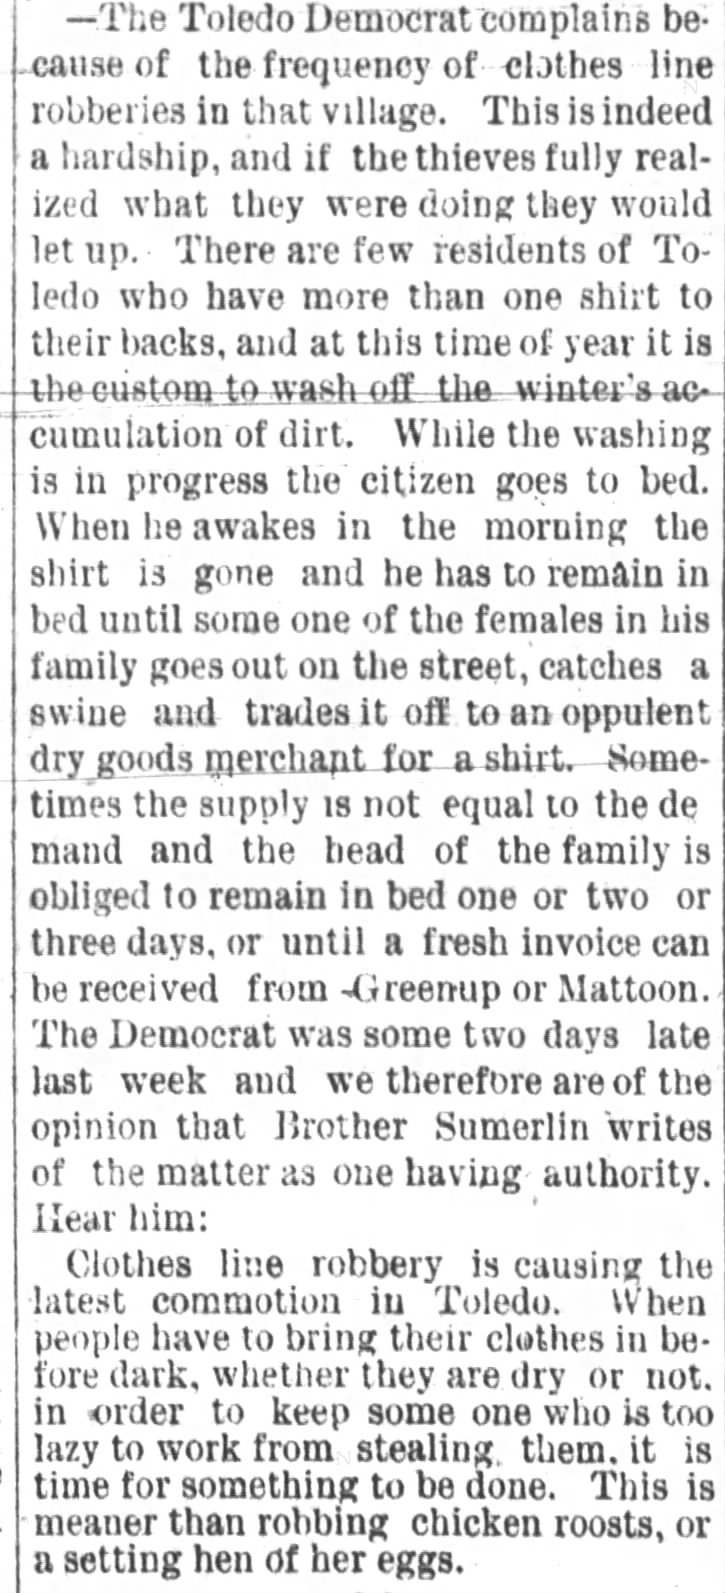 1892 clothes line robberies in Toledo